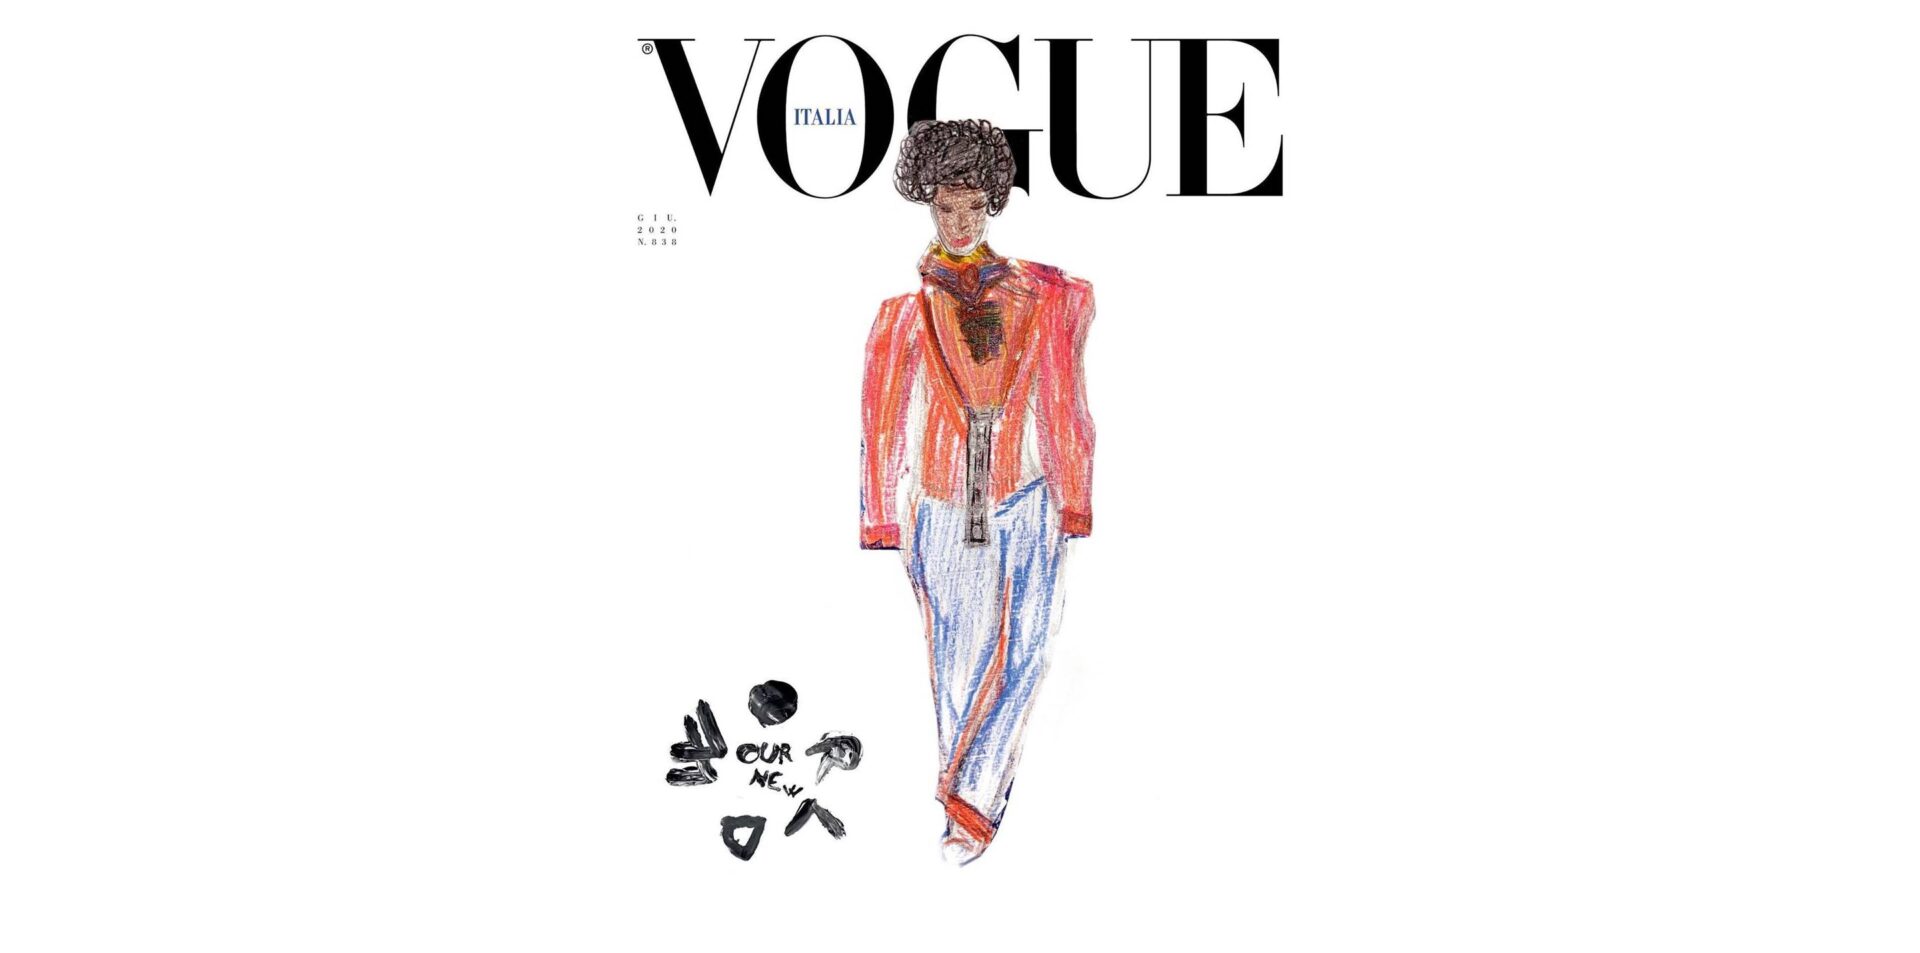 Naslovne strane italijanskog Vogue-a imaju dečije crteže umesto fotografija modela